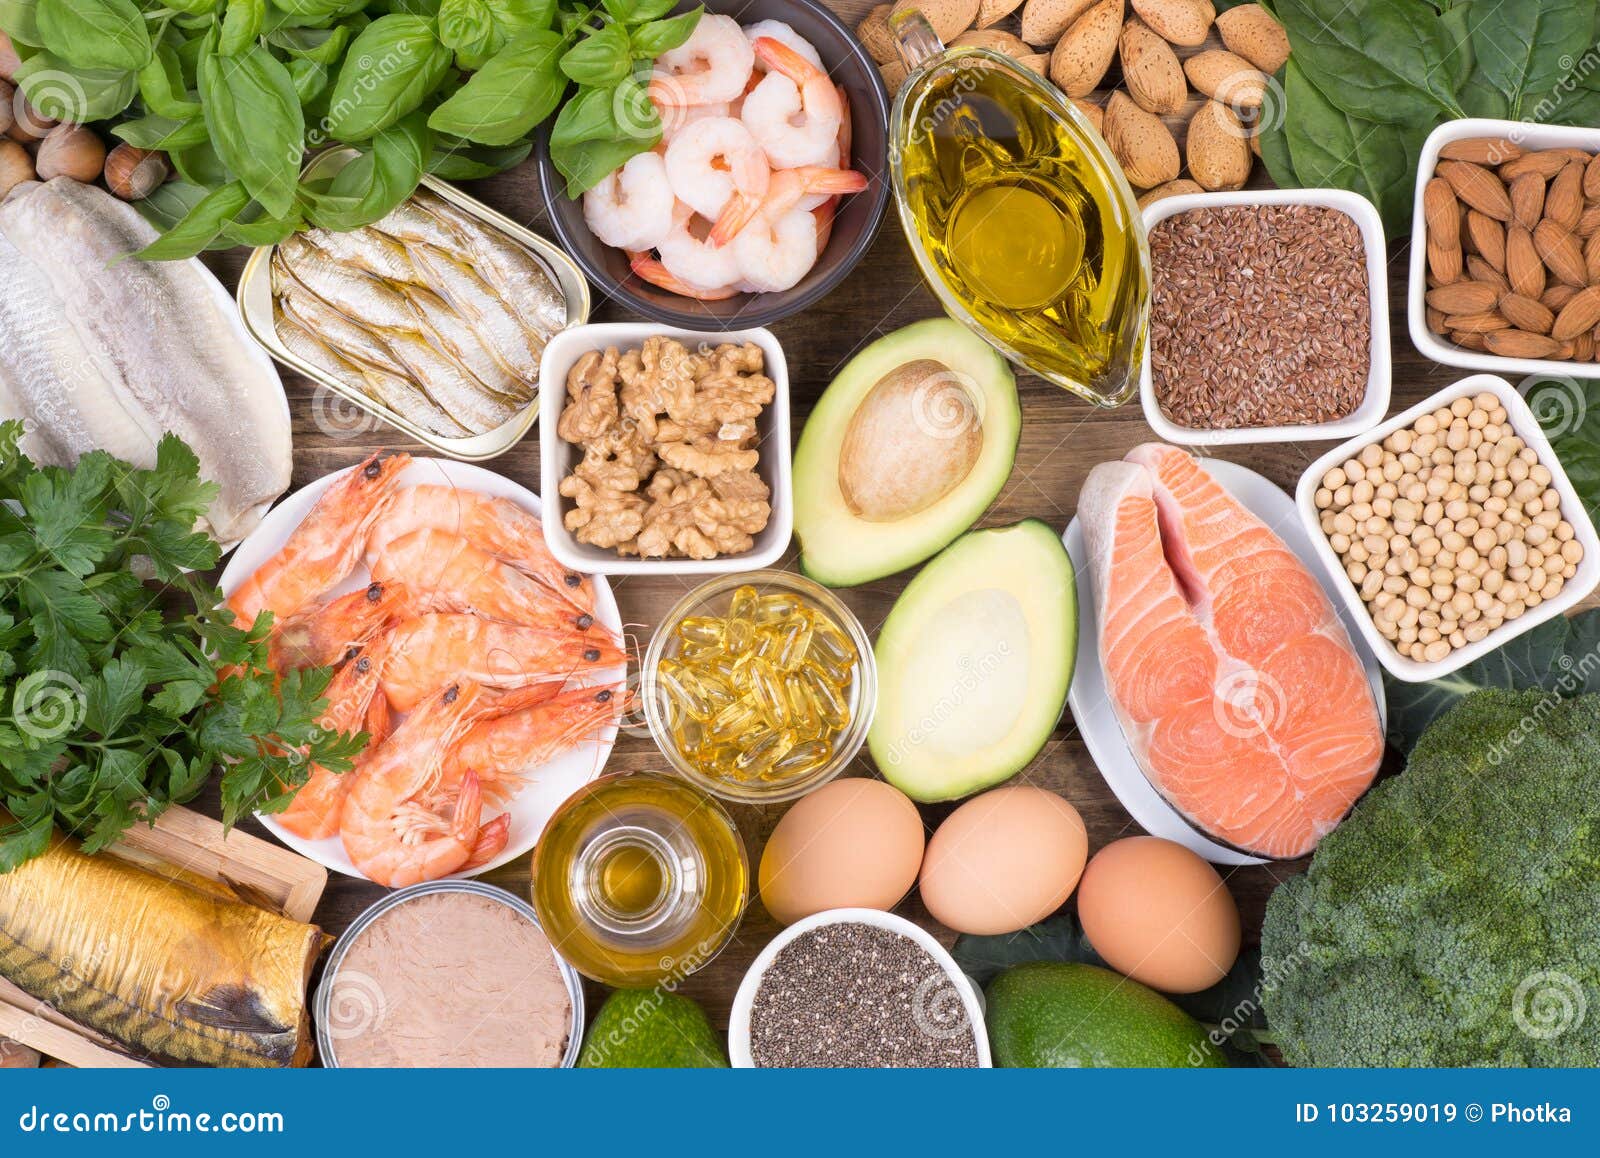 Omega 3 Fatty Acids Food Sources Stock Image - Image of ...